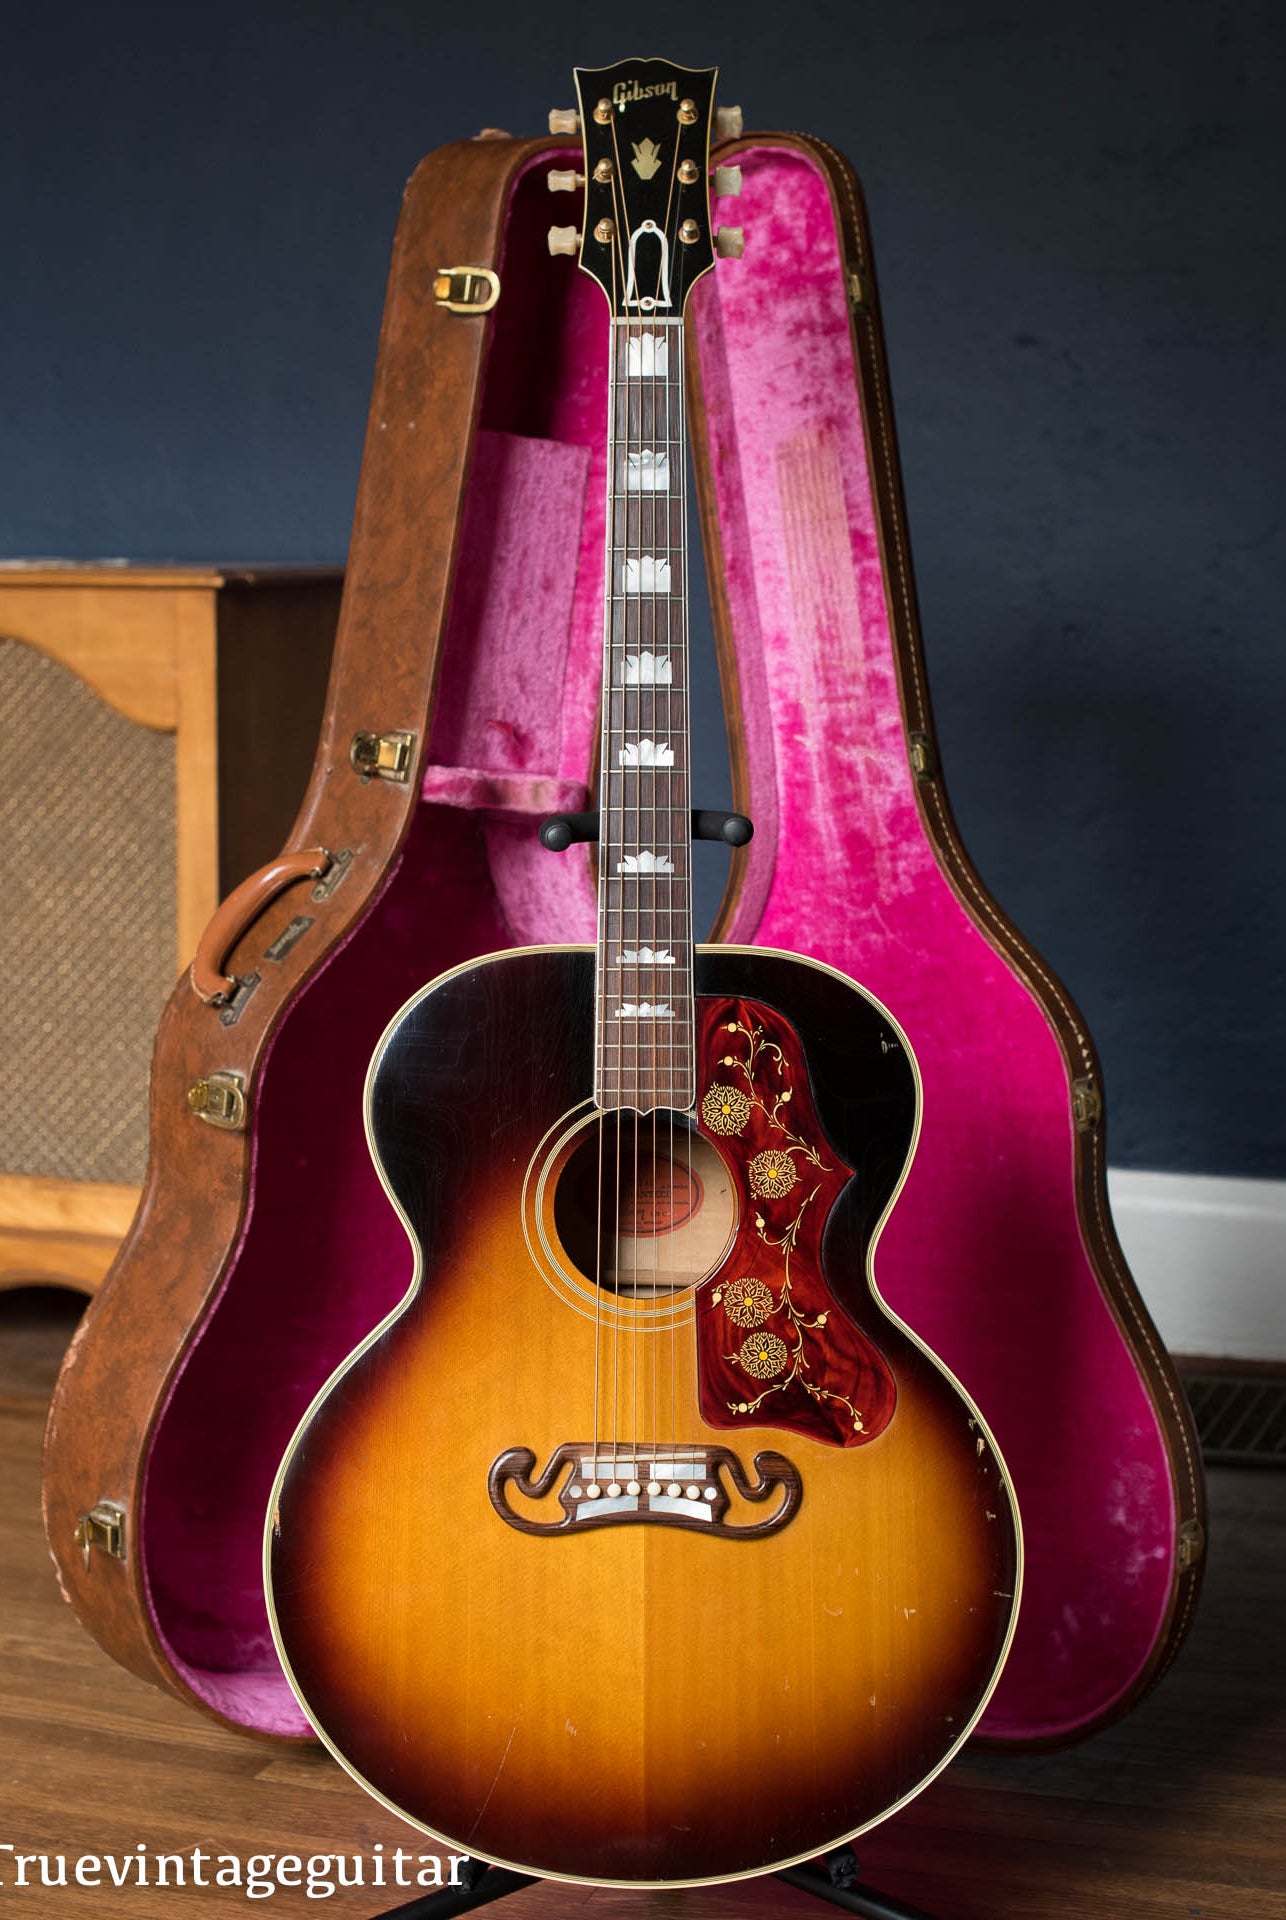 Vintage 1958 Gibson J-200 Sunburst acoustic guitar